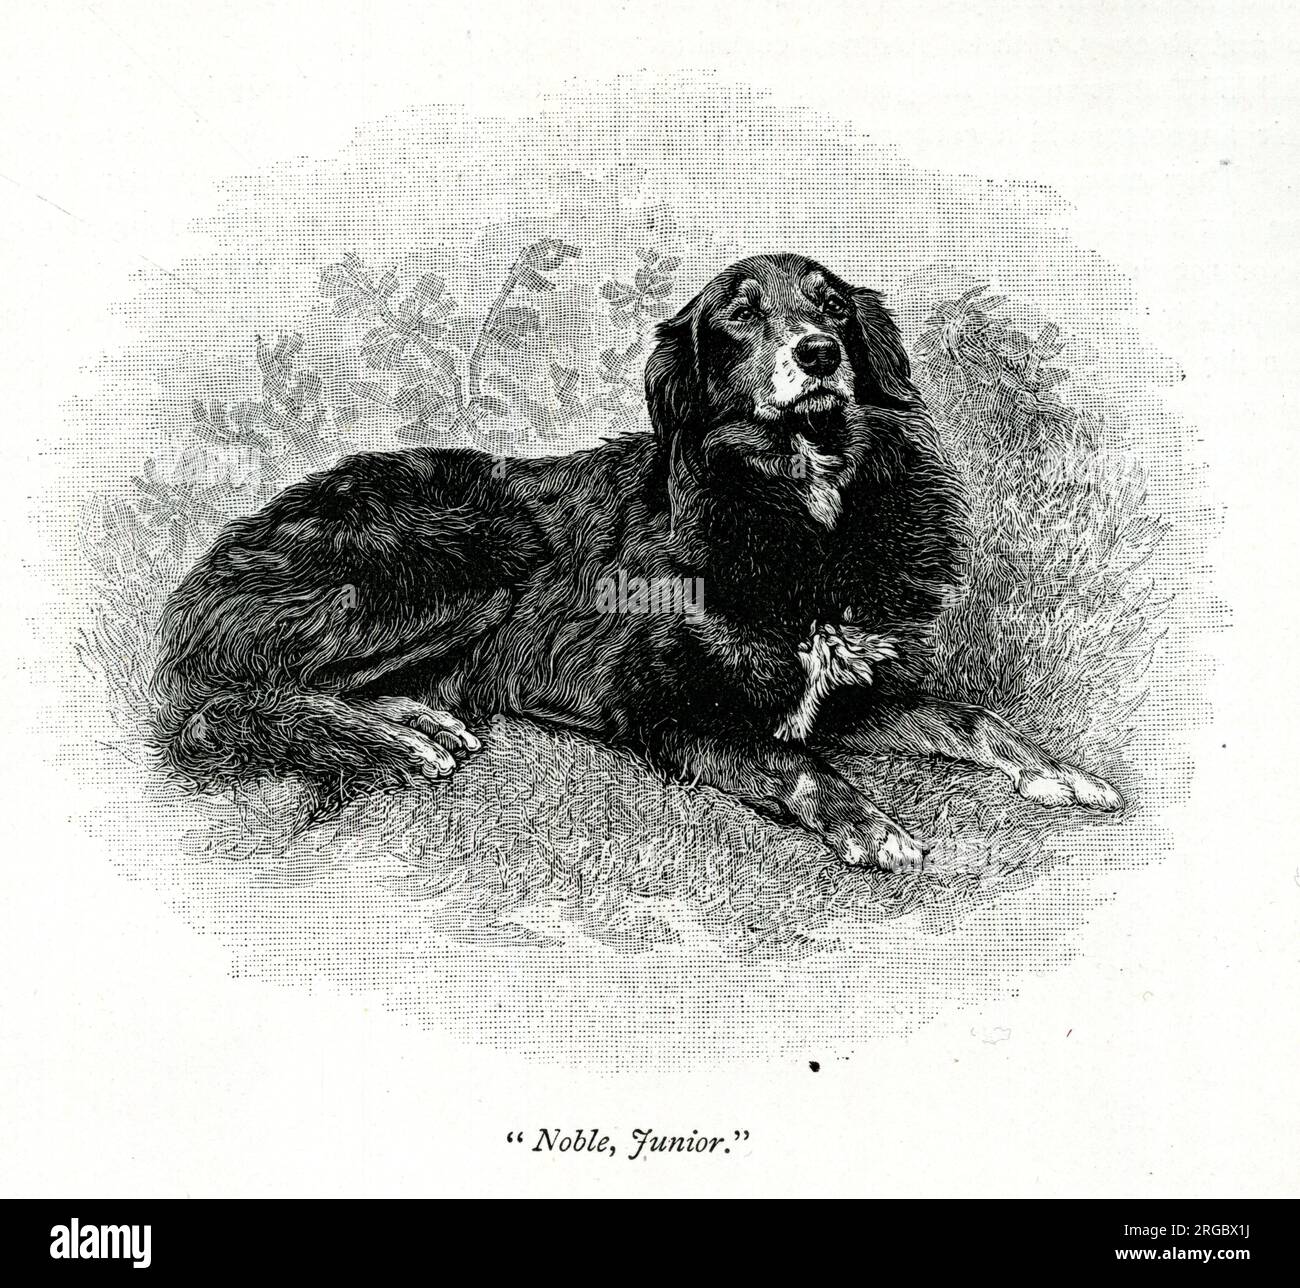 Queen Victoria's dog, Noble, Junior - 'The Queen's Dogs' Stock Photo